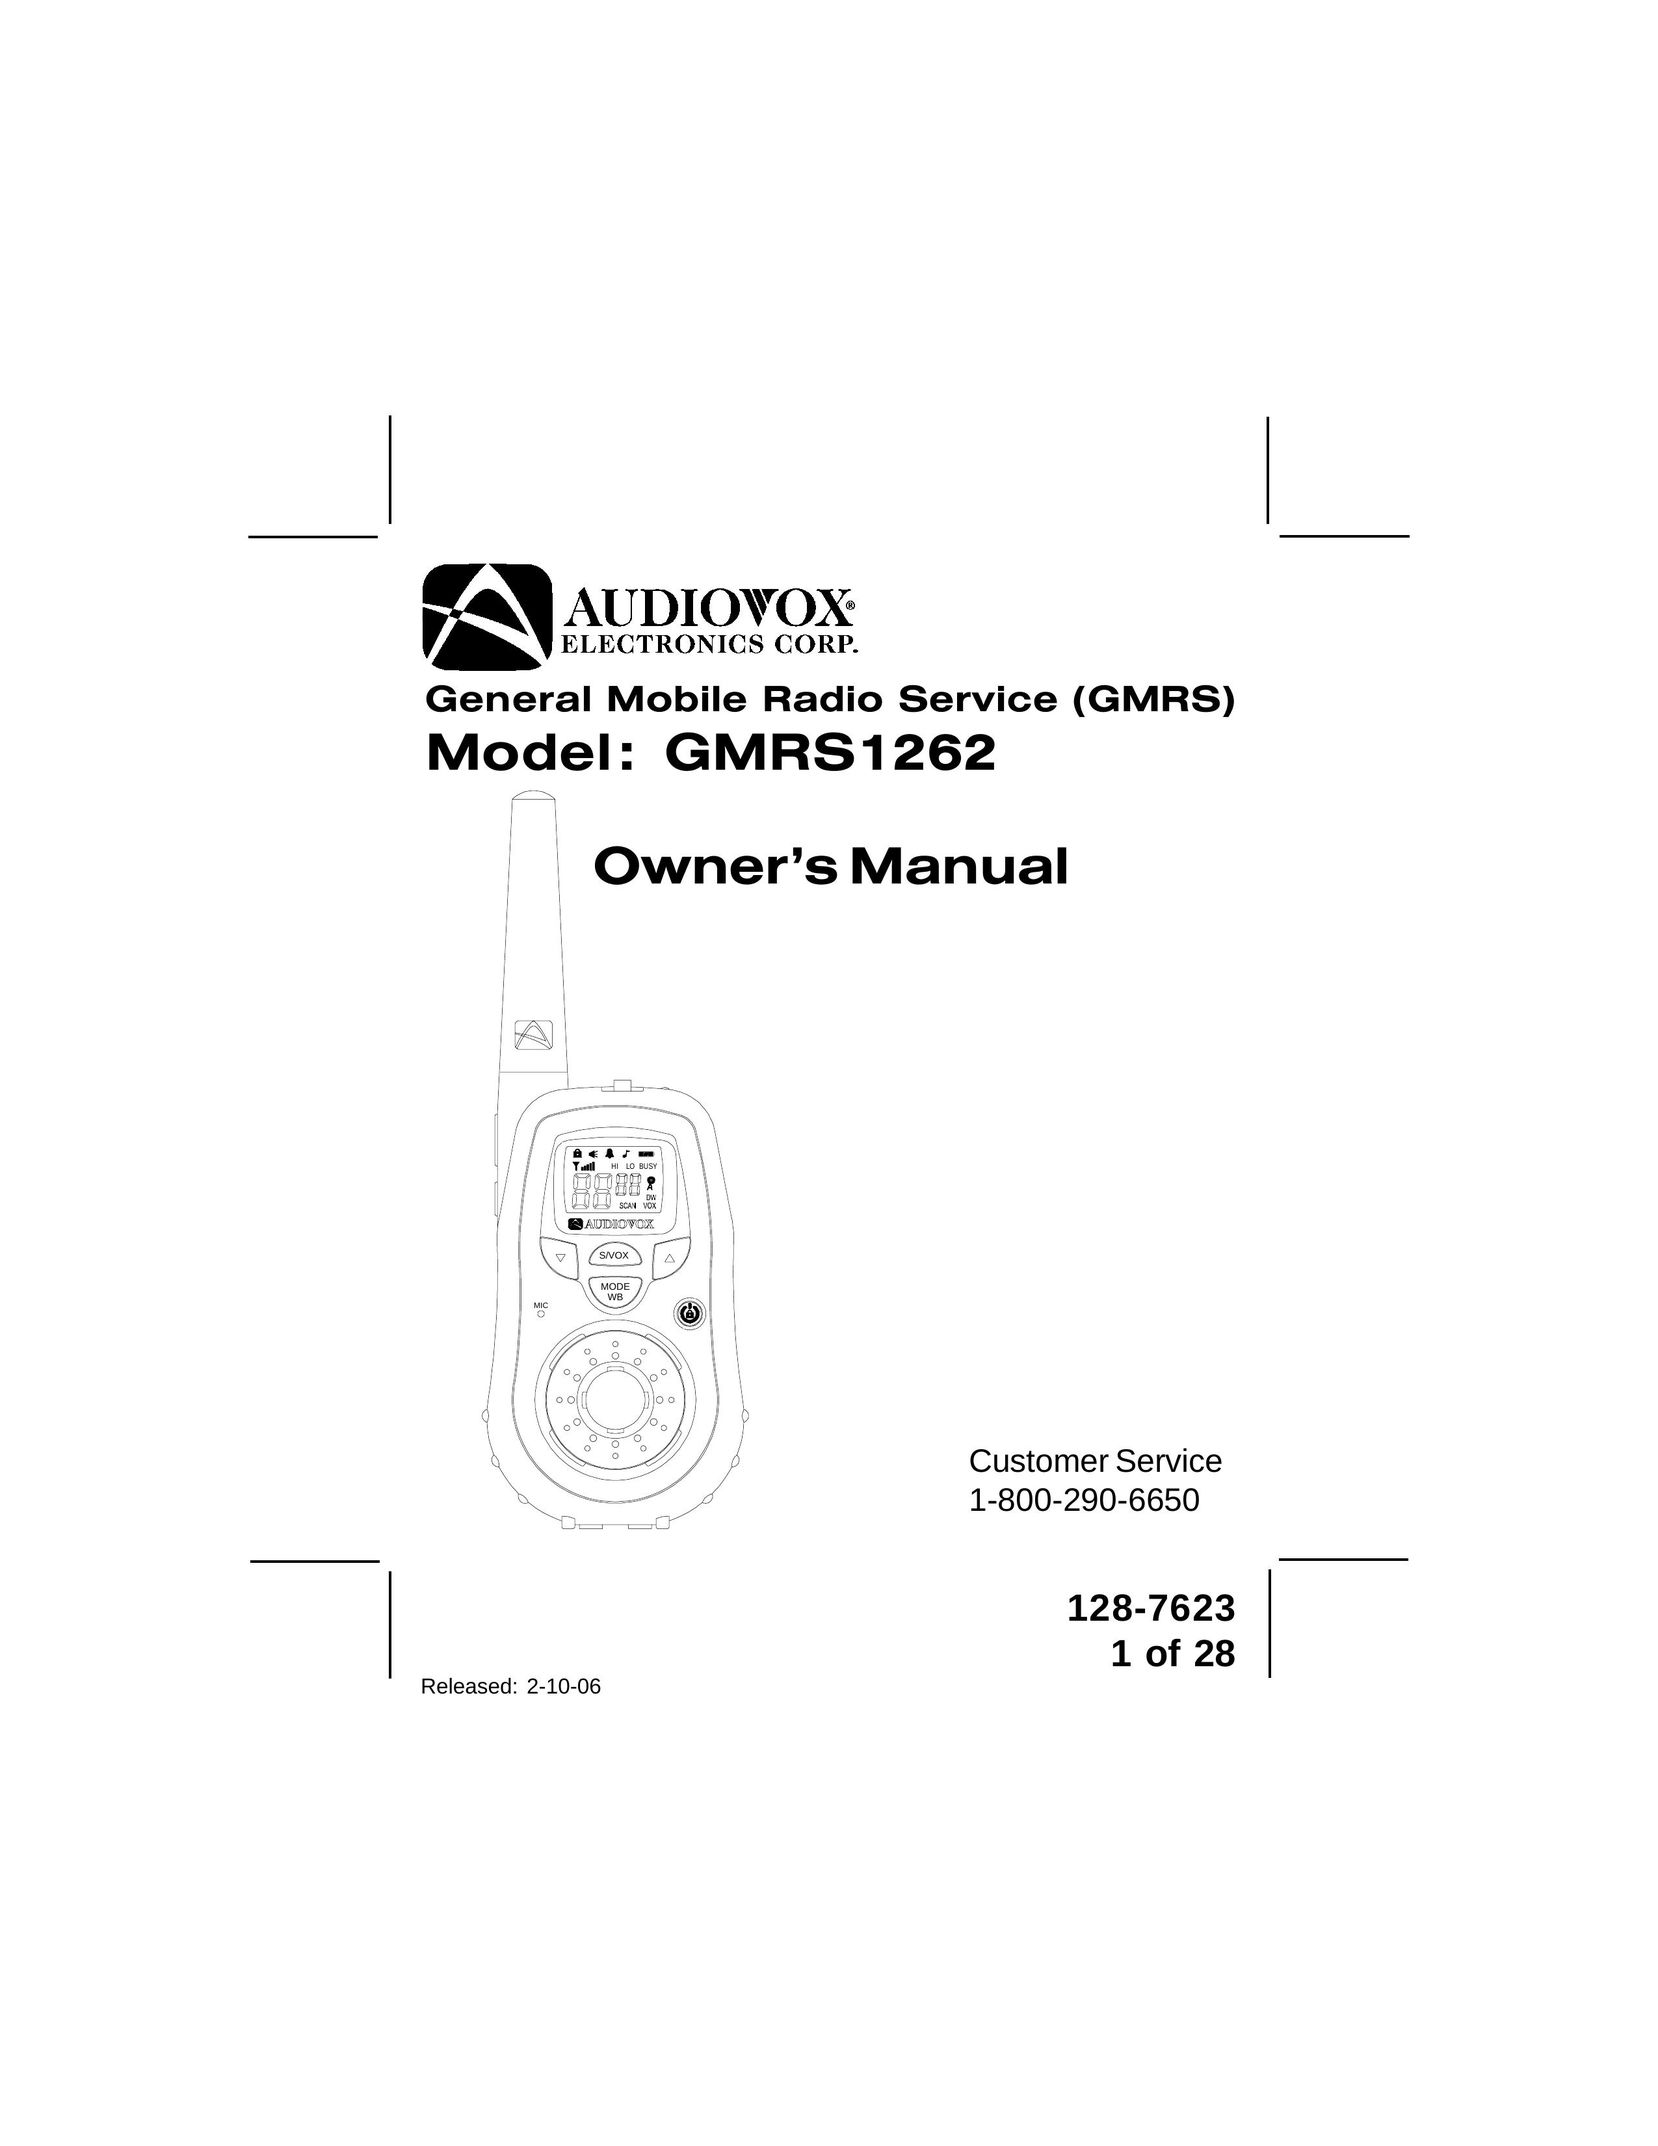 Audiovox GMRS1262 Two-Way Radio User Manual